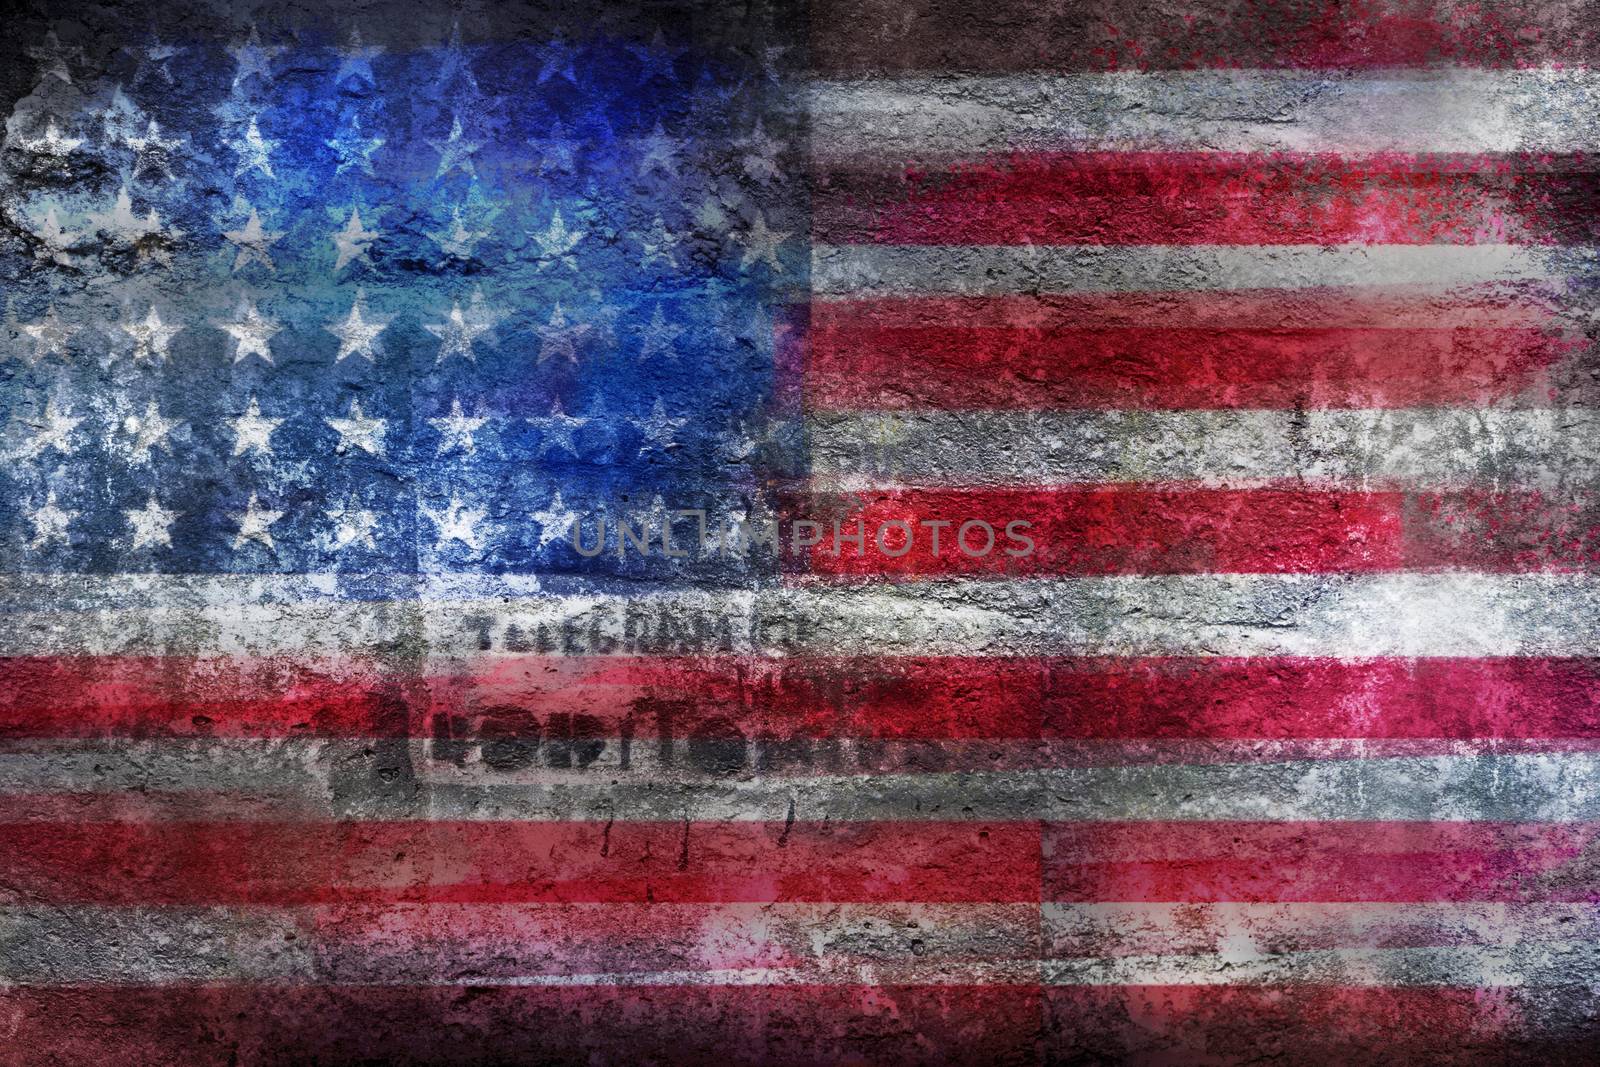 Grunge US flag on stone surface background closeup by SlayCer